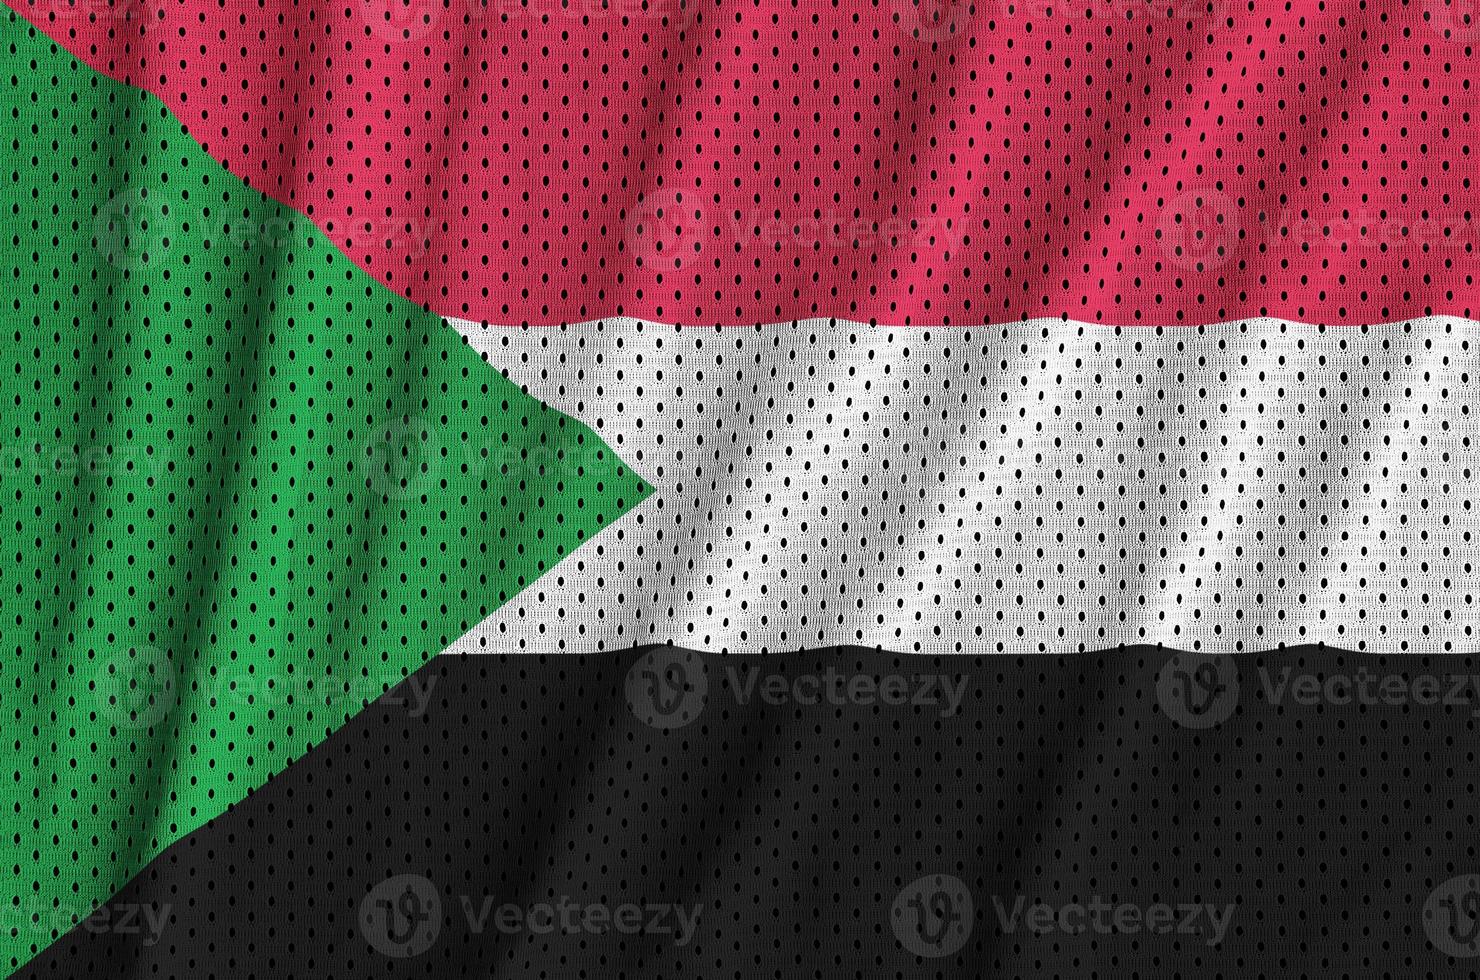 Sudan flag printed on a polyester nylon sportswear mesh fabric w photo